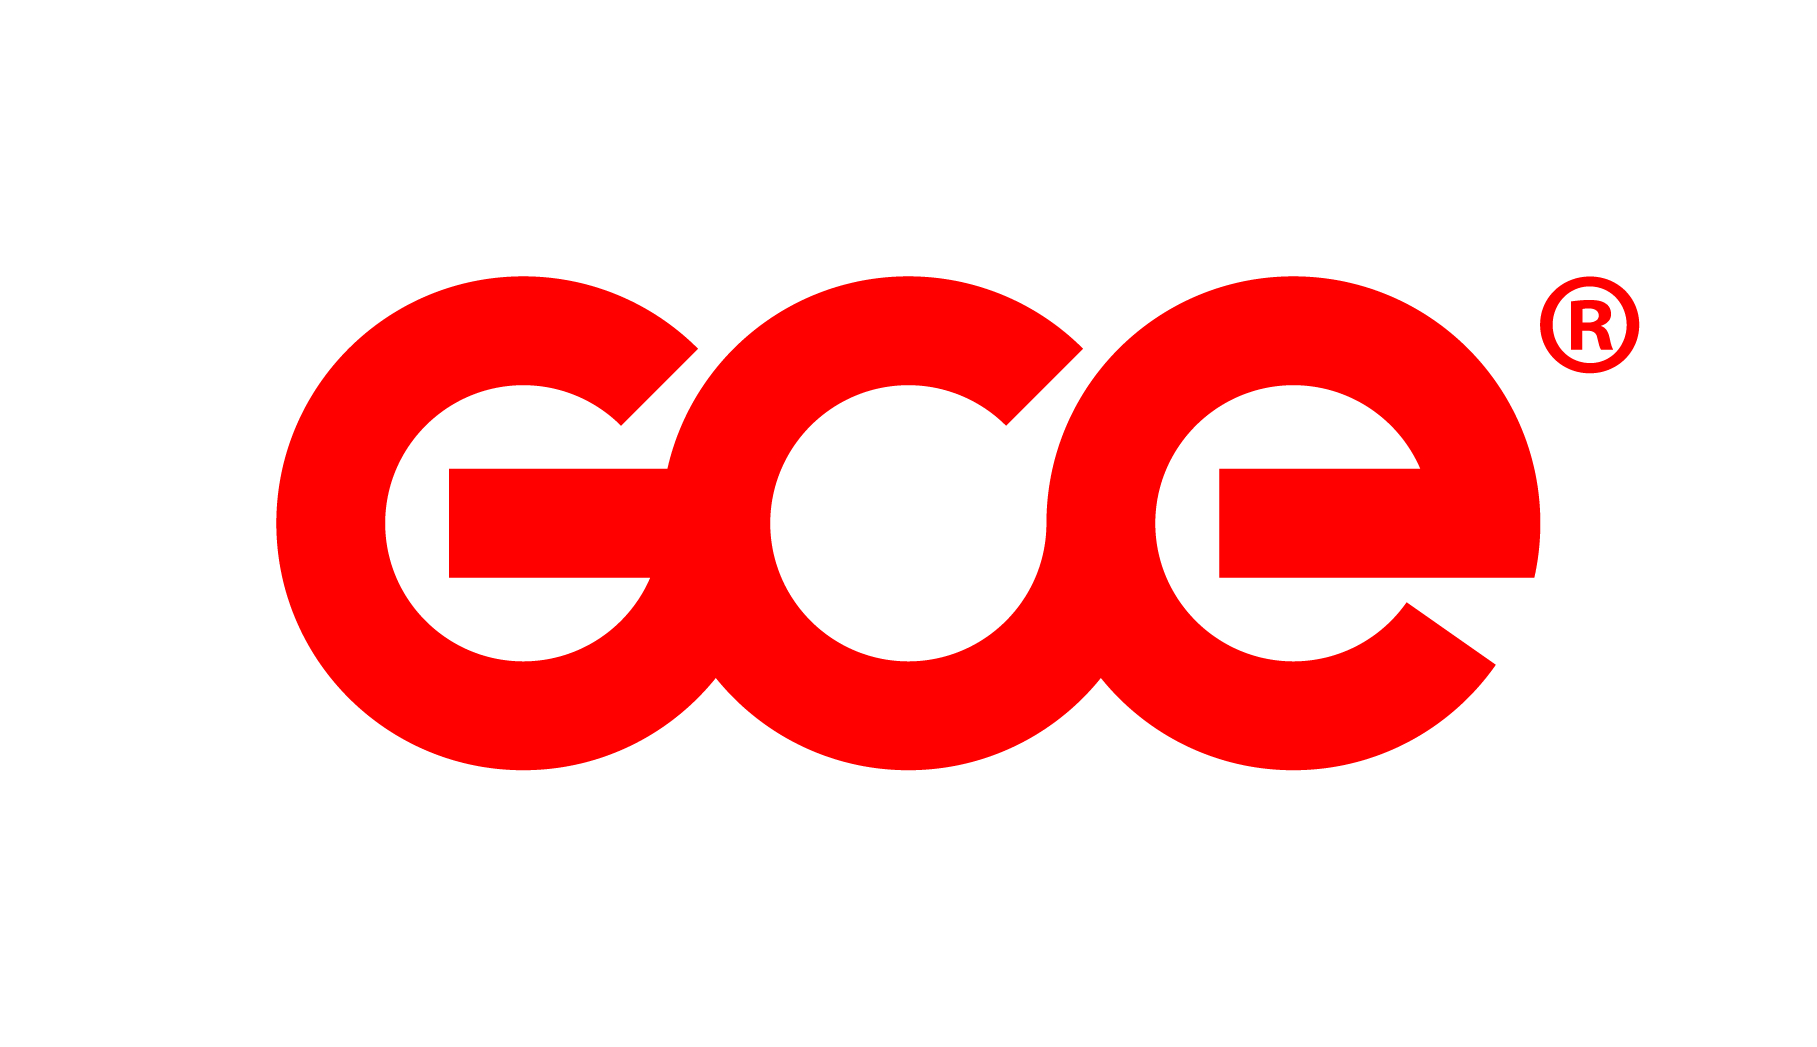 Control co ltd. GCE фирма. Krass логотип. GCE krass продукция. GCE krass логотип вектор.